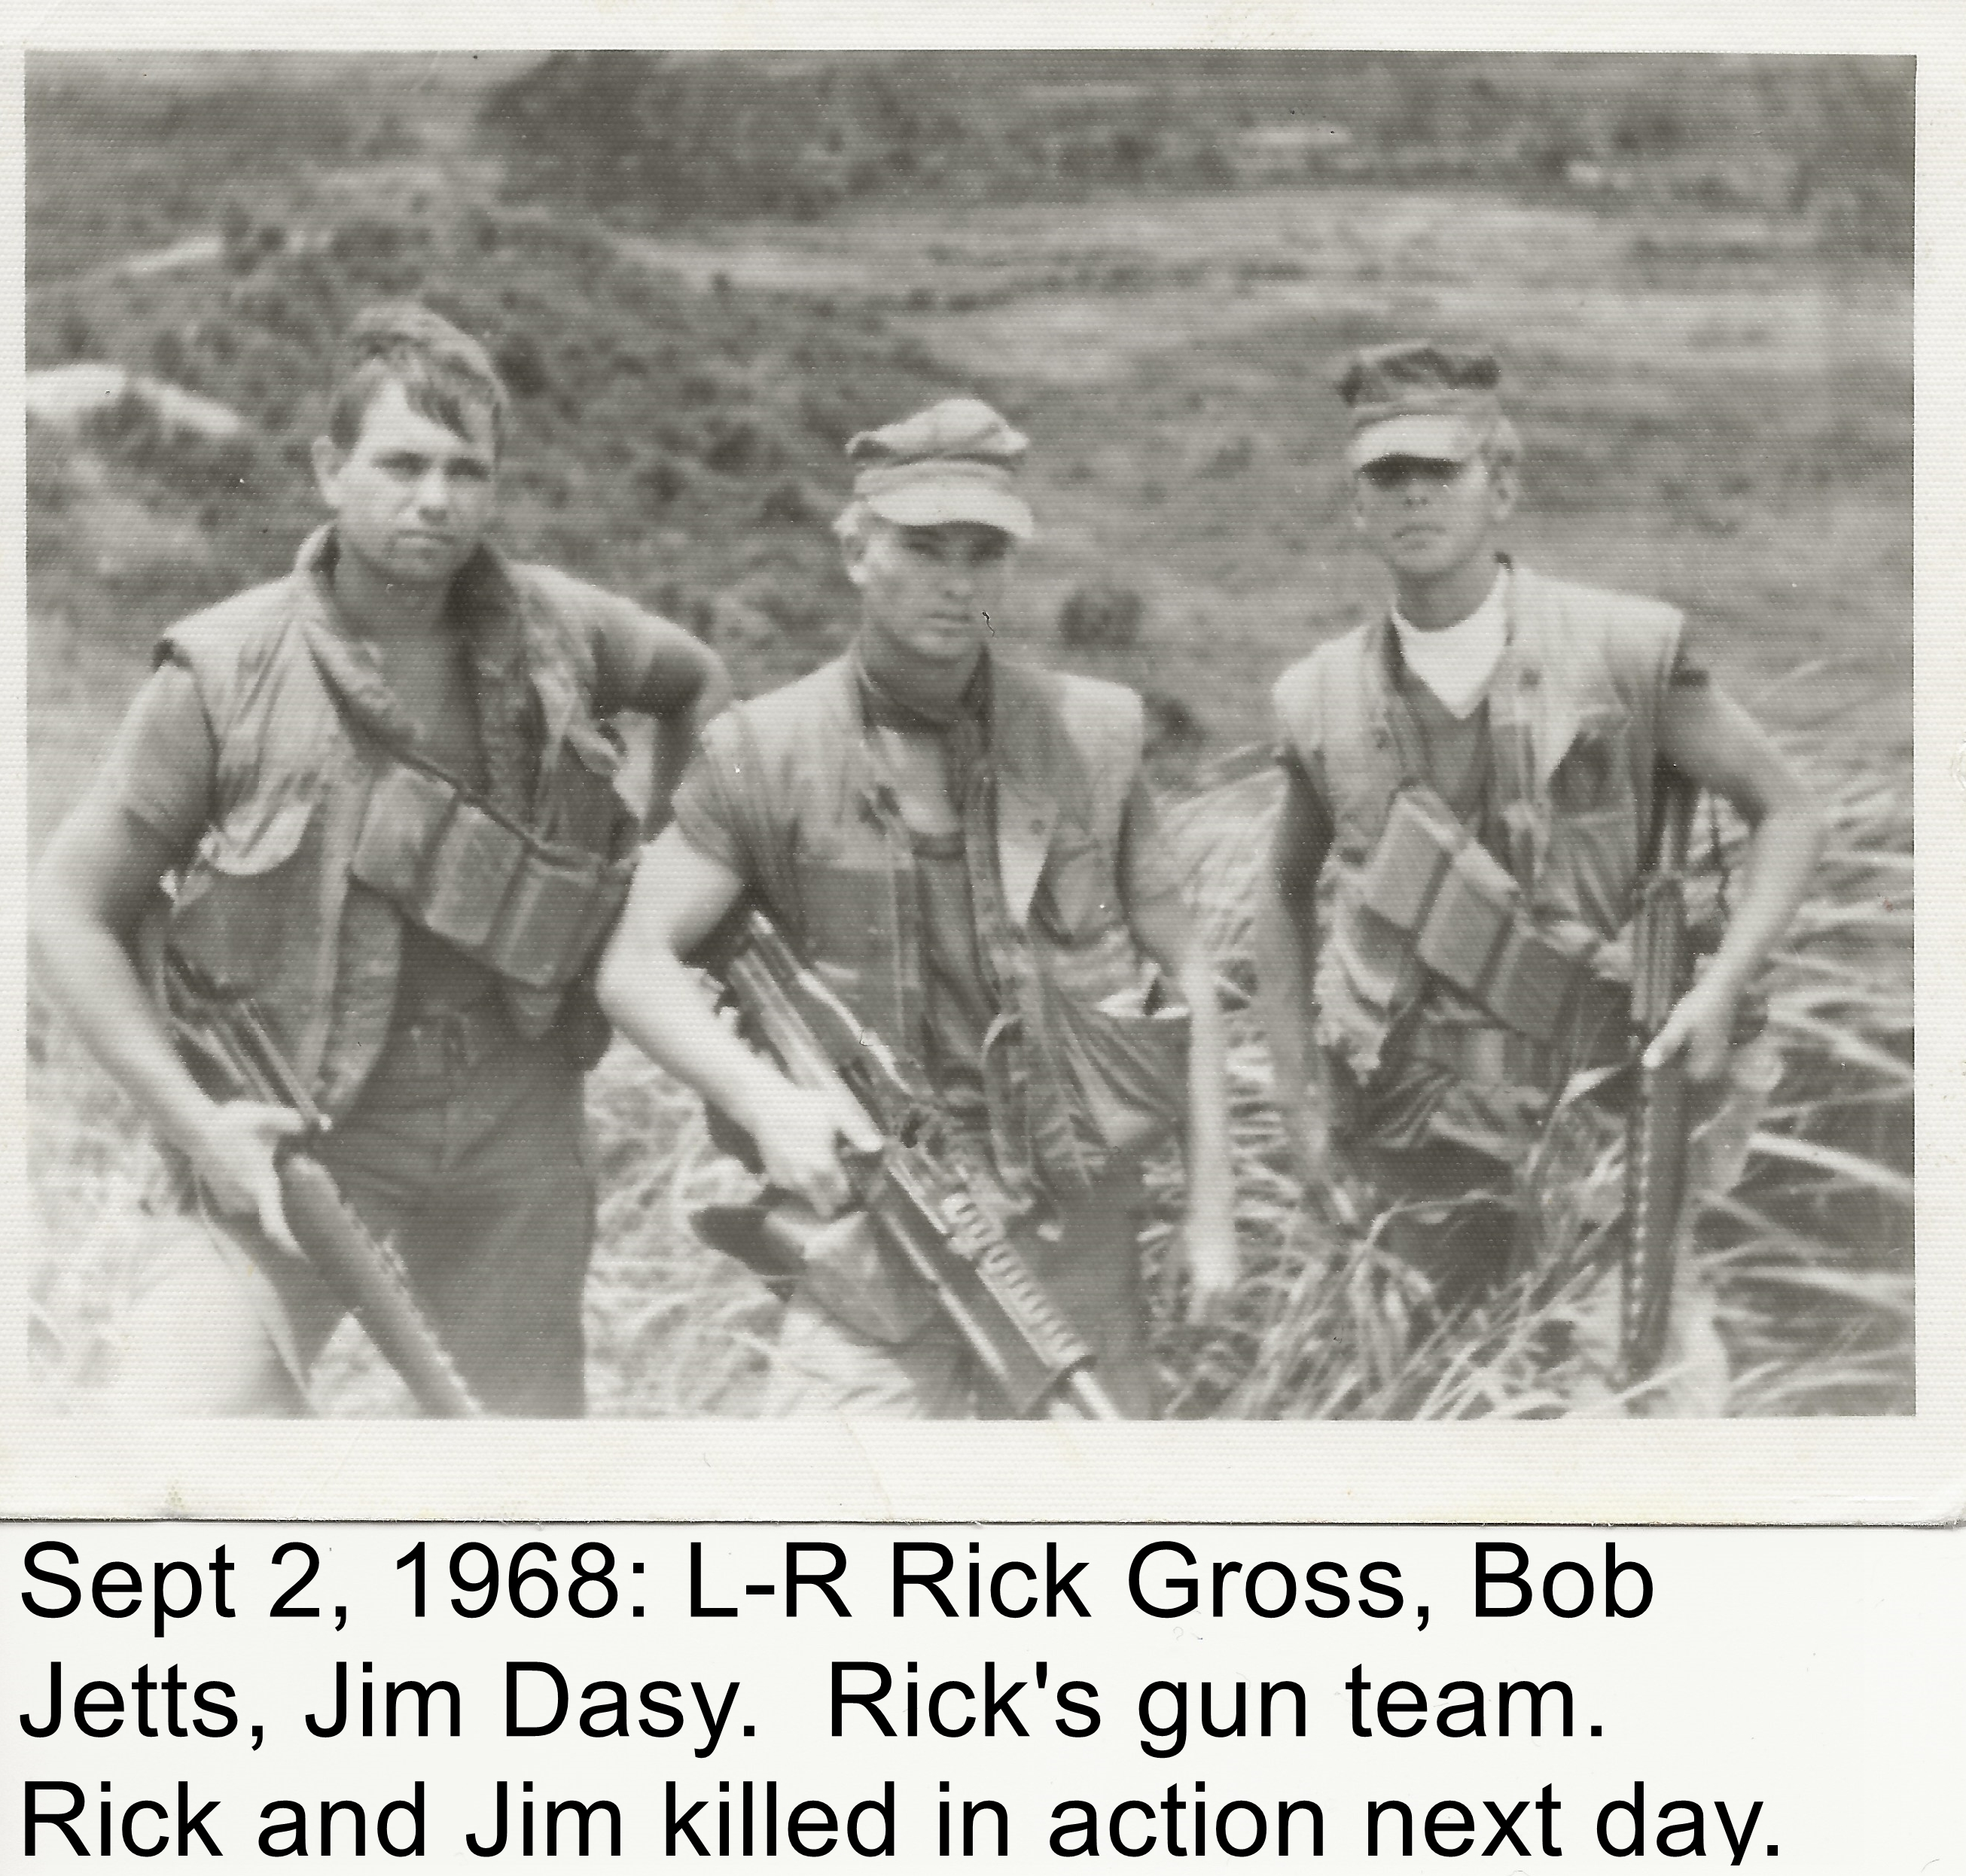 Richard Alban Gross with his gun team